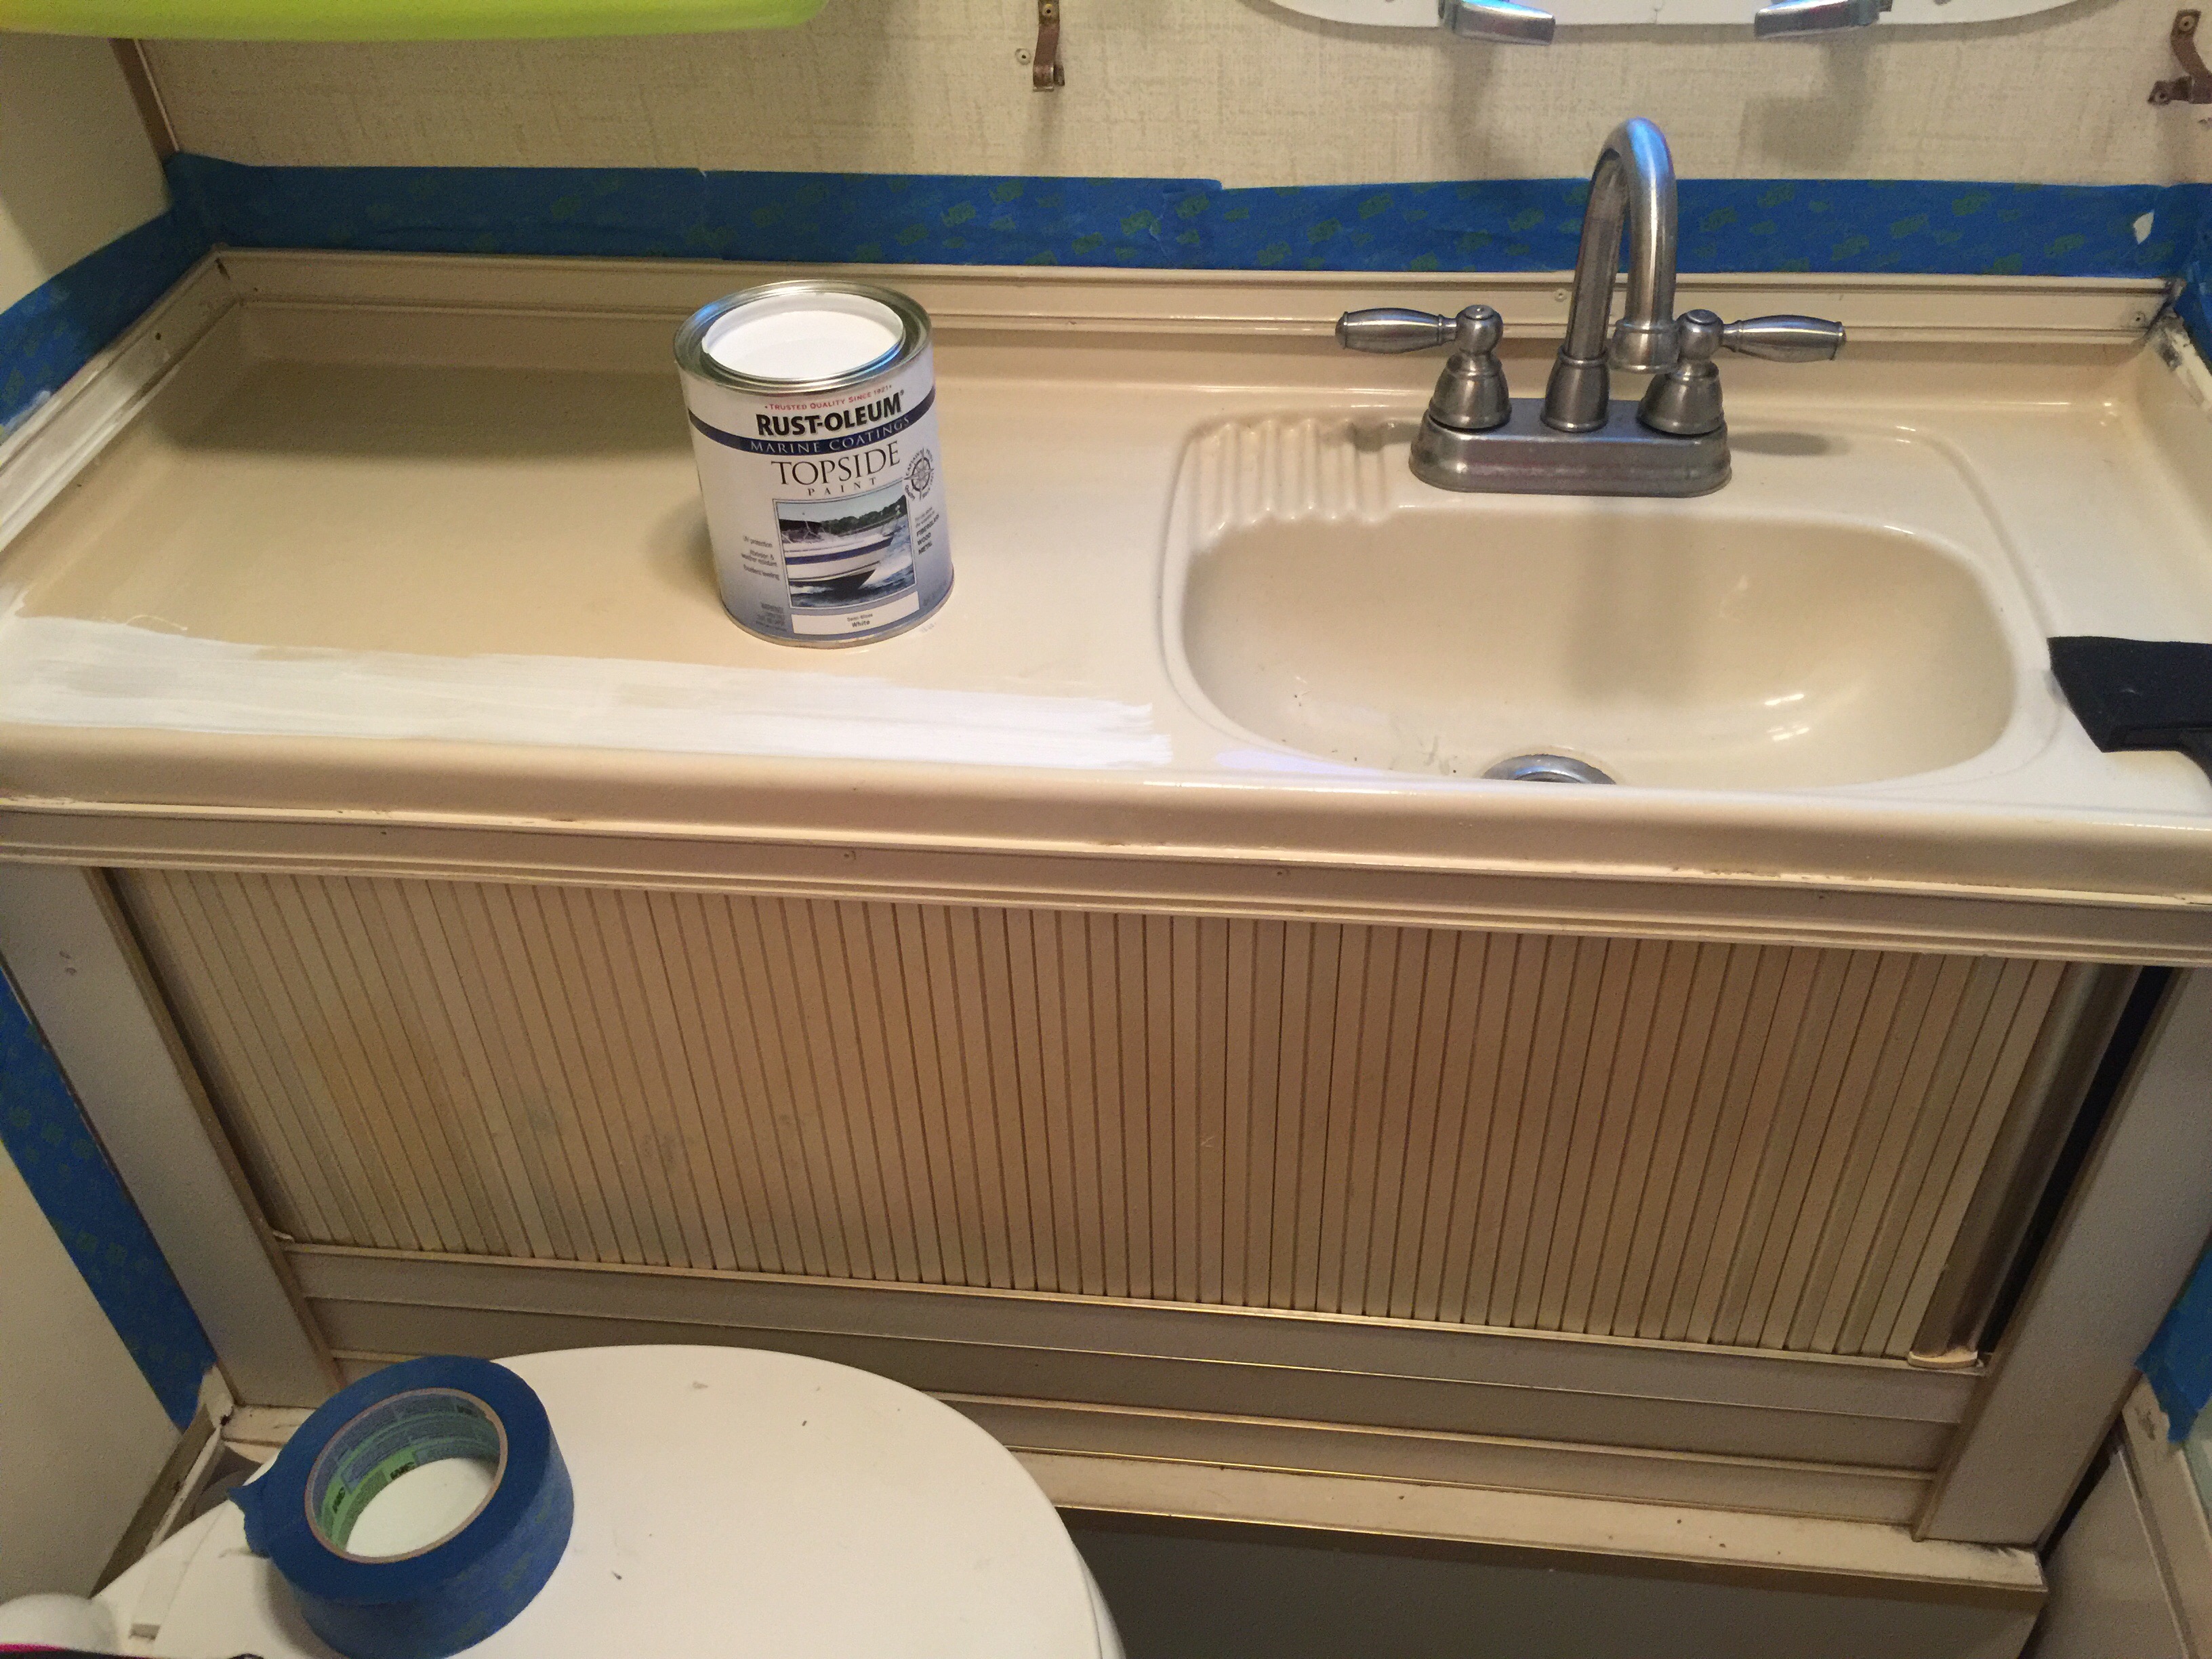 Paul Paints 3 Fiberglass Bathroom Sinks Different Colors At An